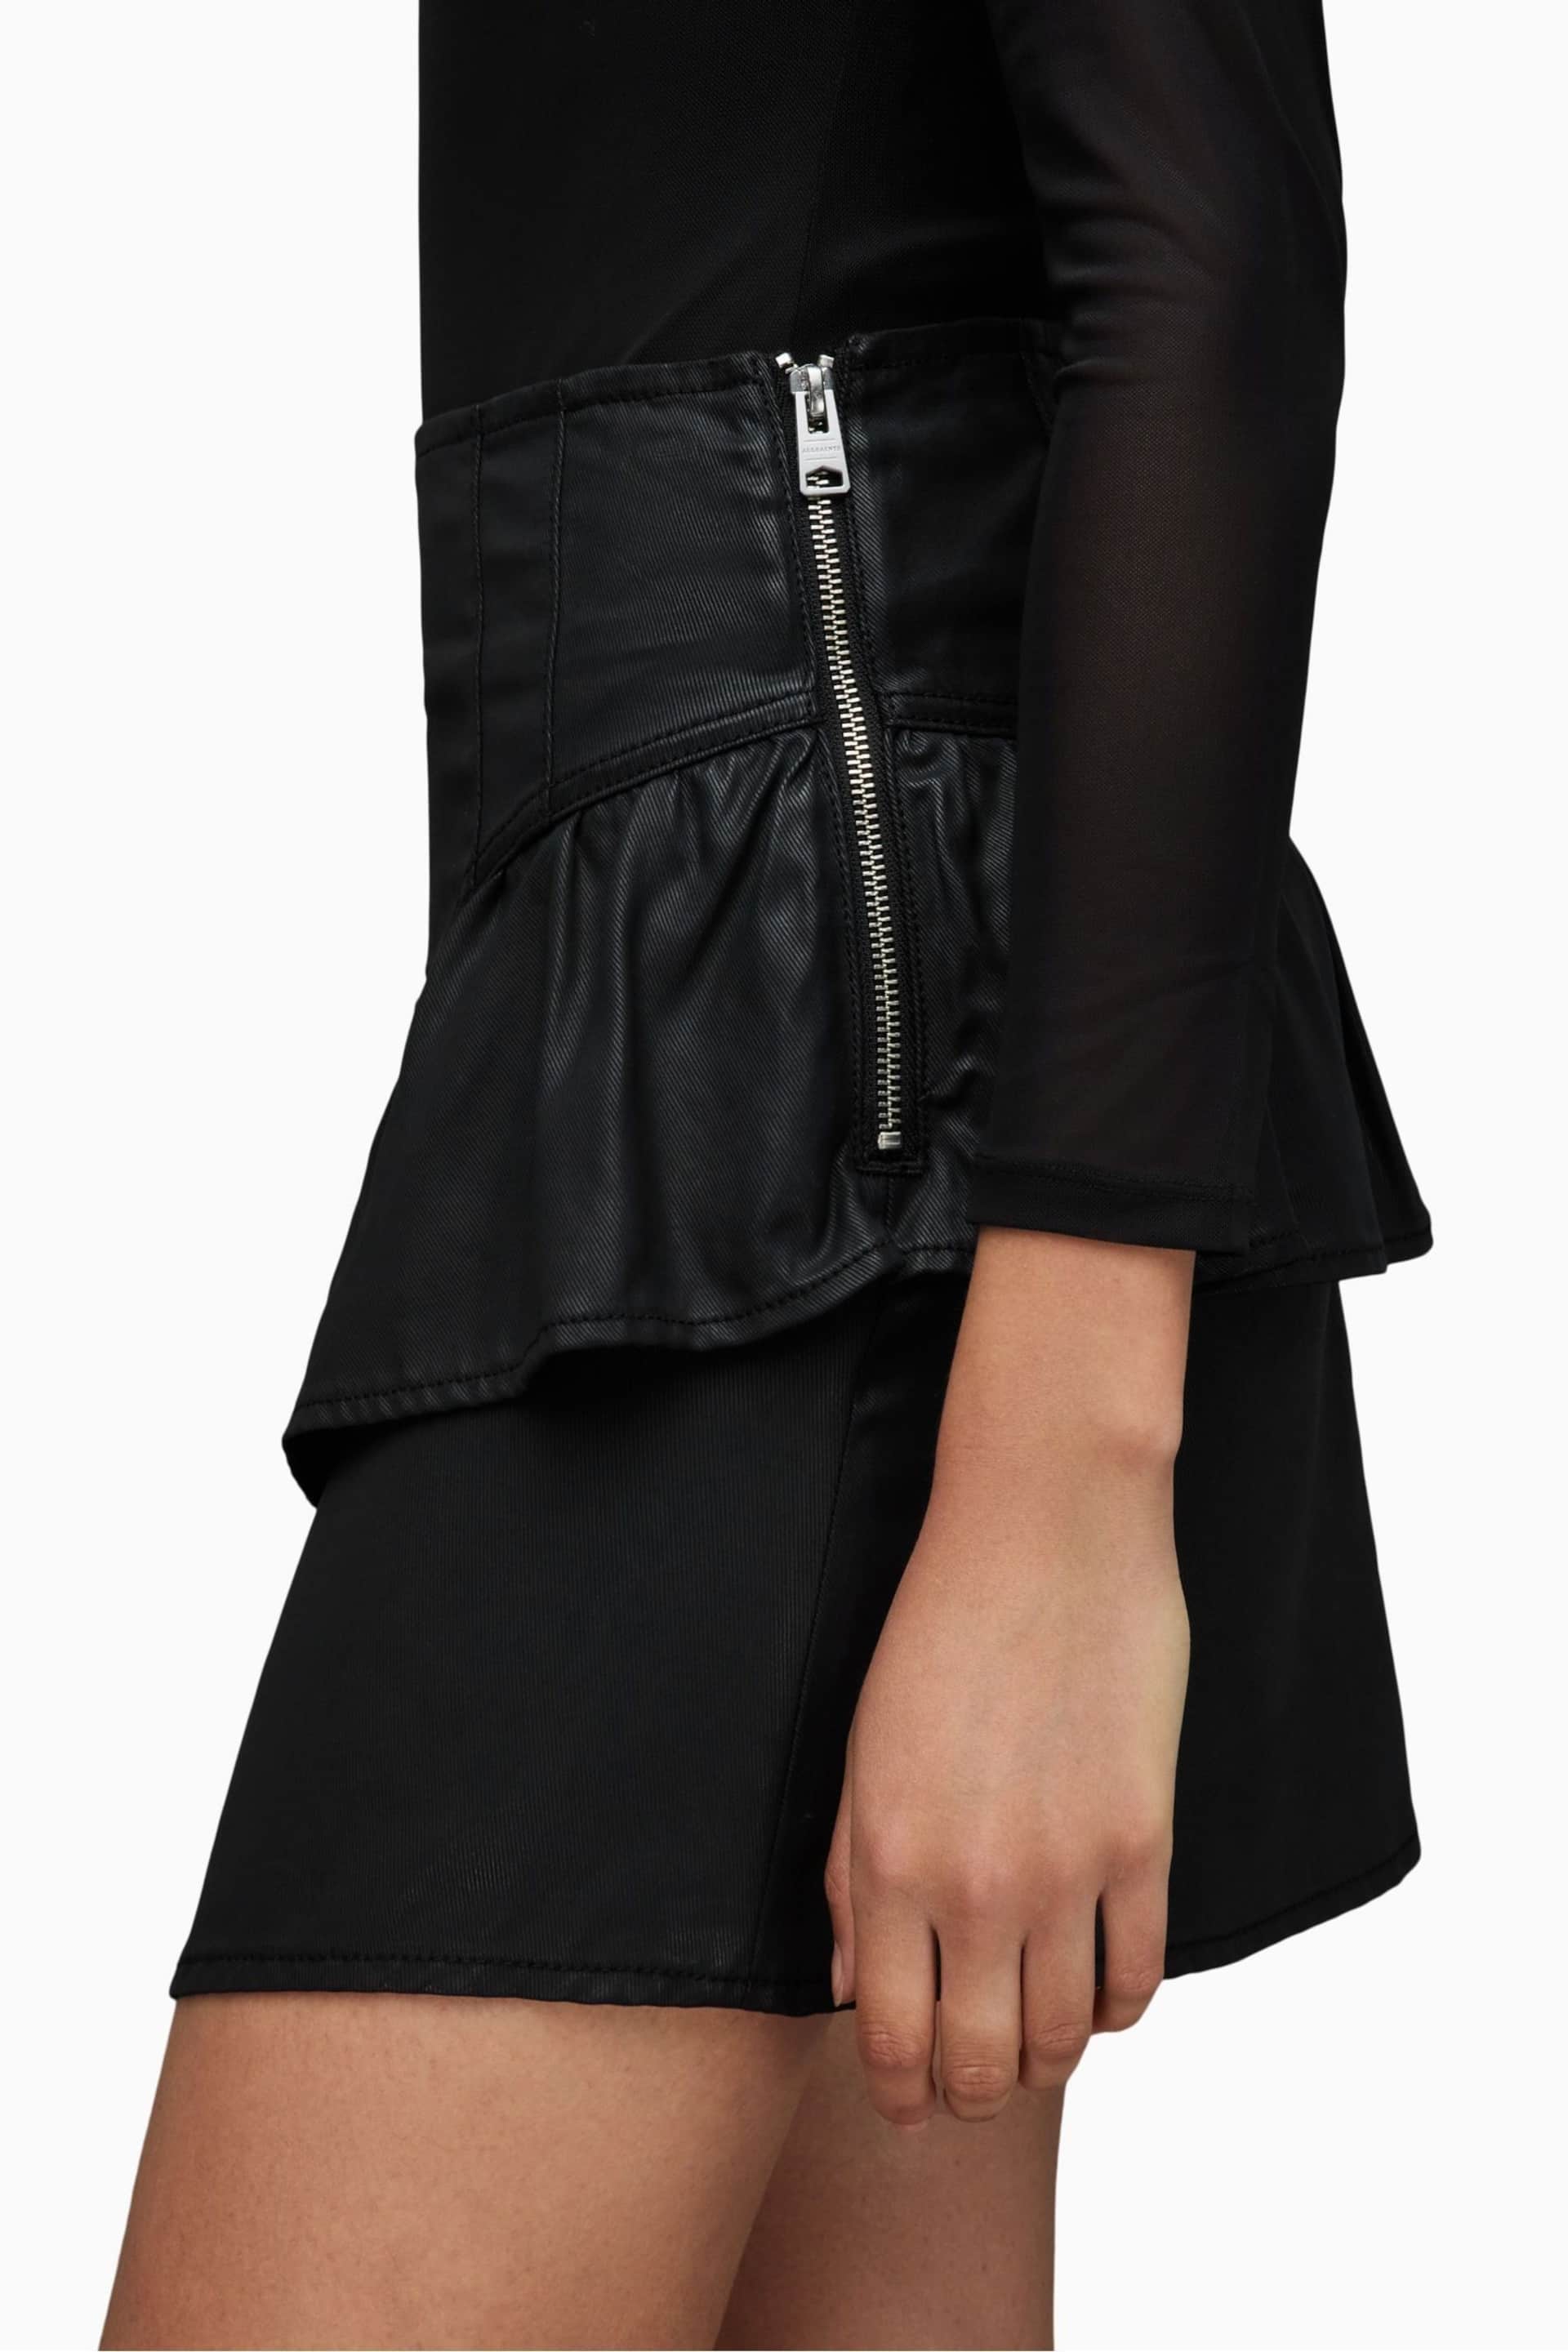 AllSaints Black Andy Coated Denim Skirt - Image 5 of 6